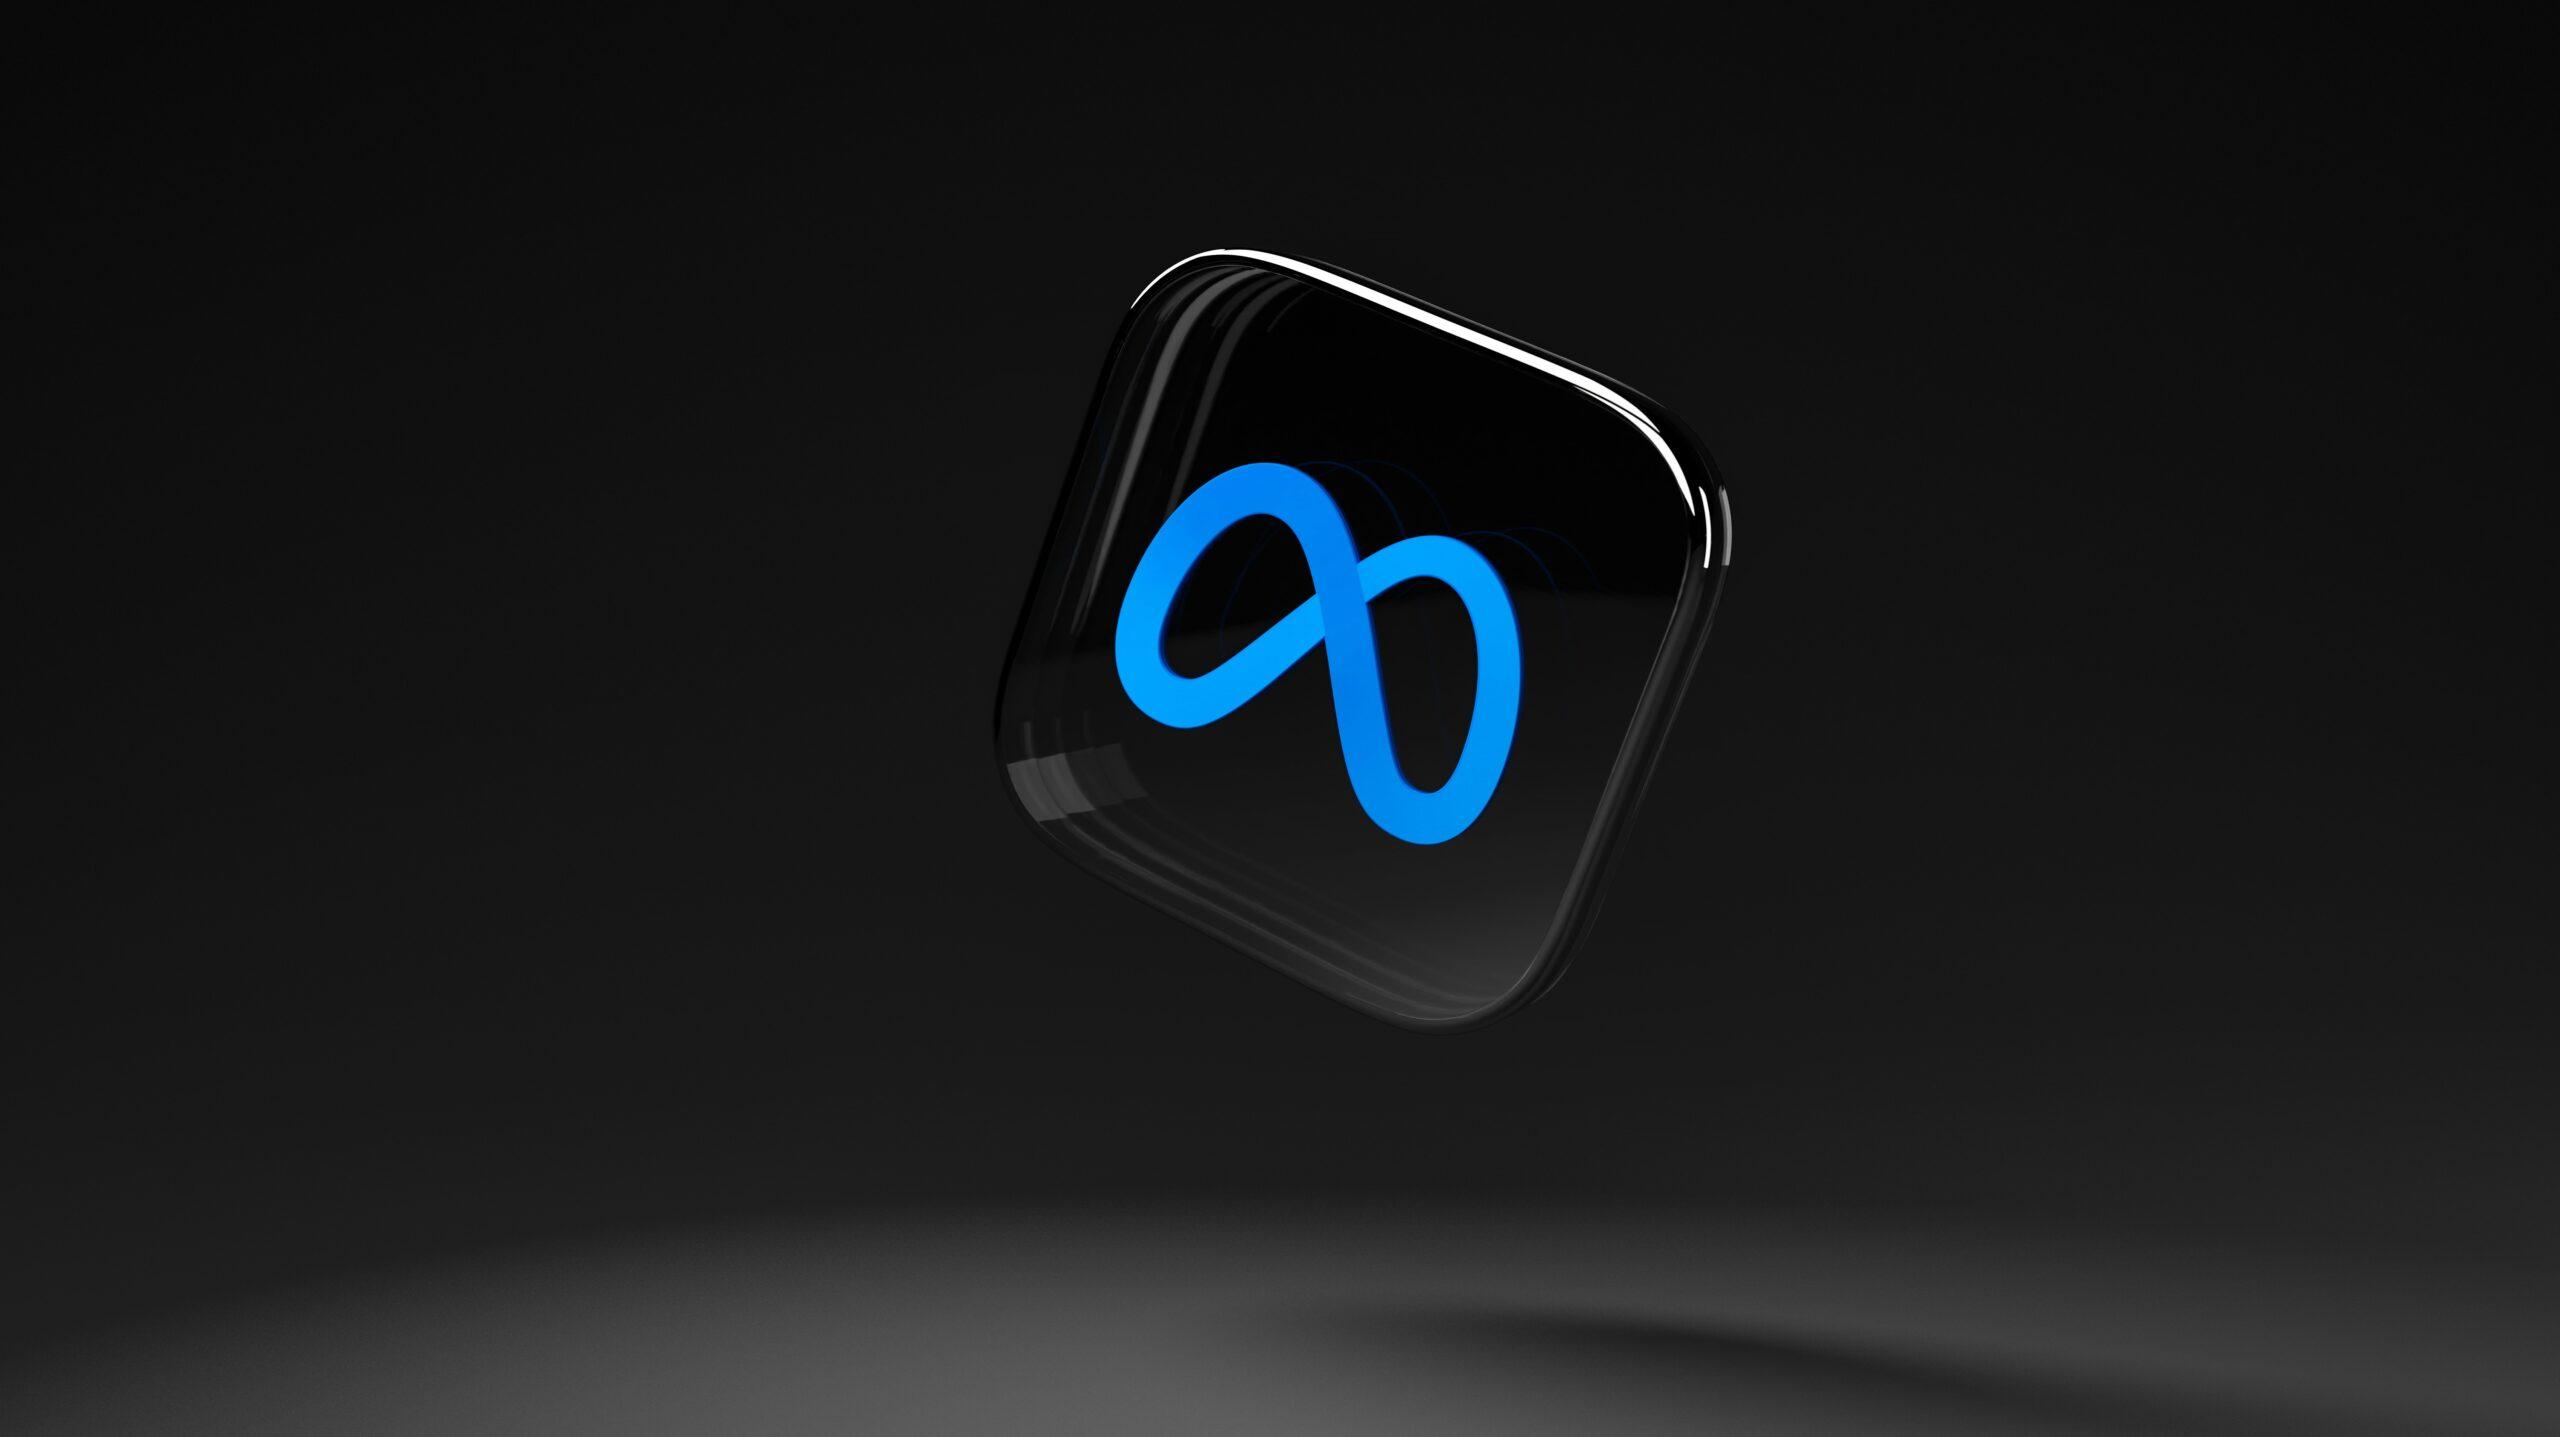 A blue-coloured Meta logo against a black background.